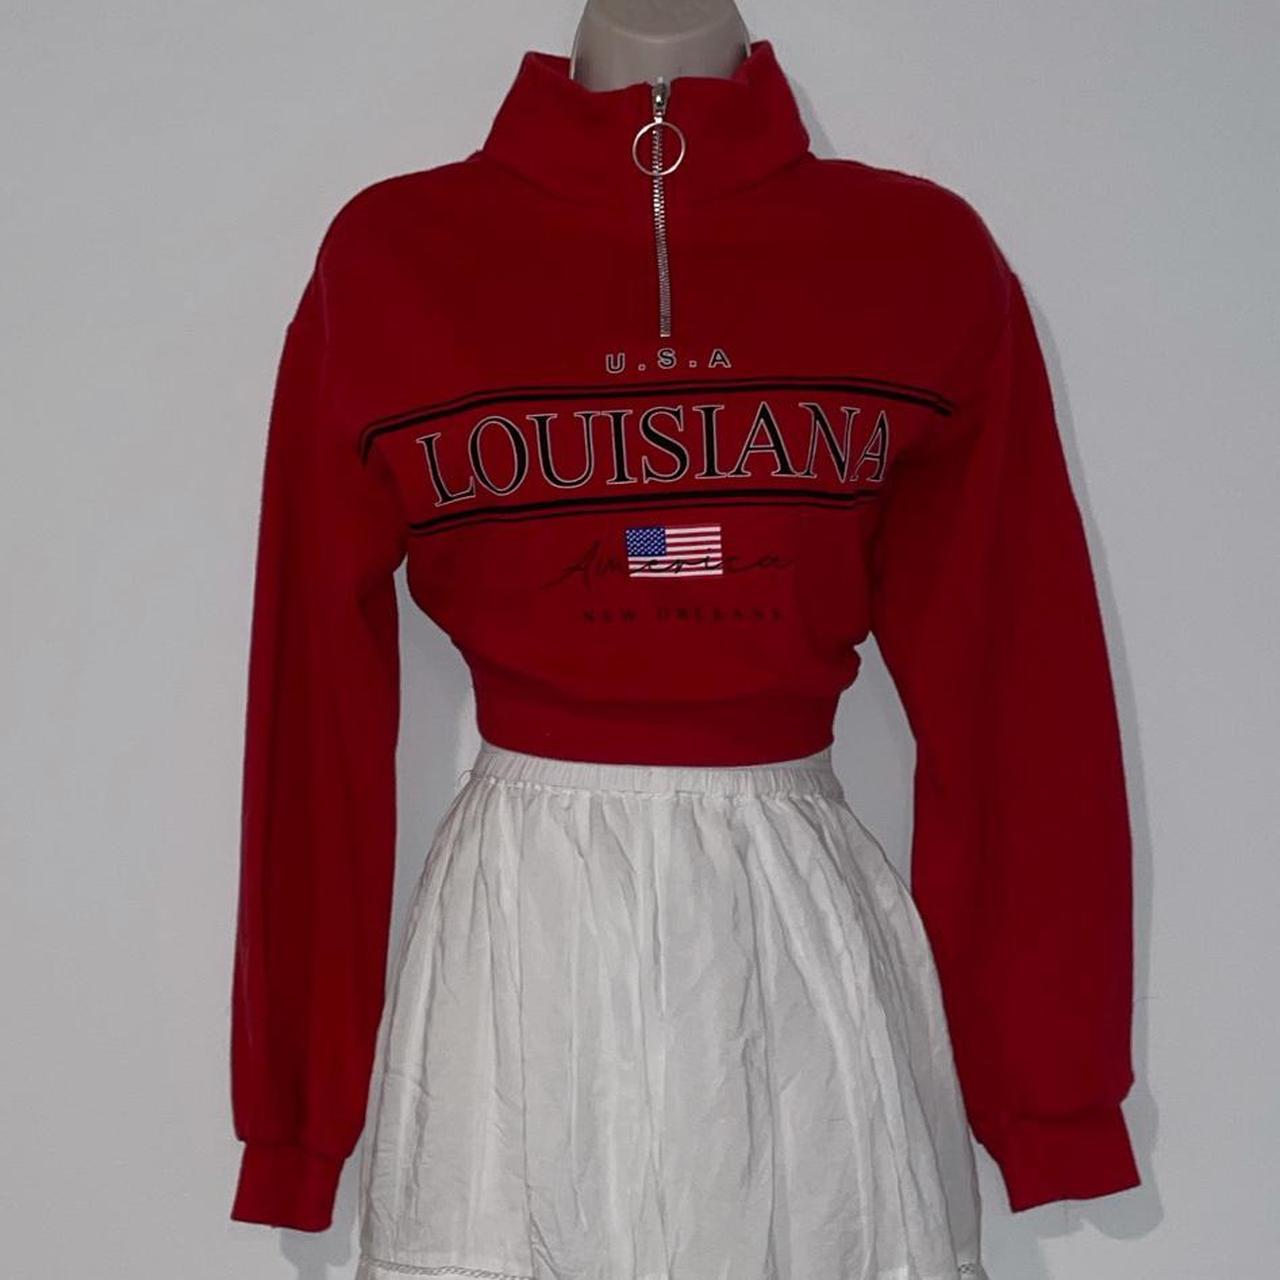 Product Image 2 - Cropped Louisiana sweatshirt ❤️


Brand: Divided